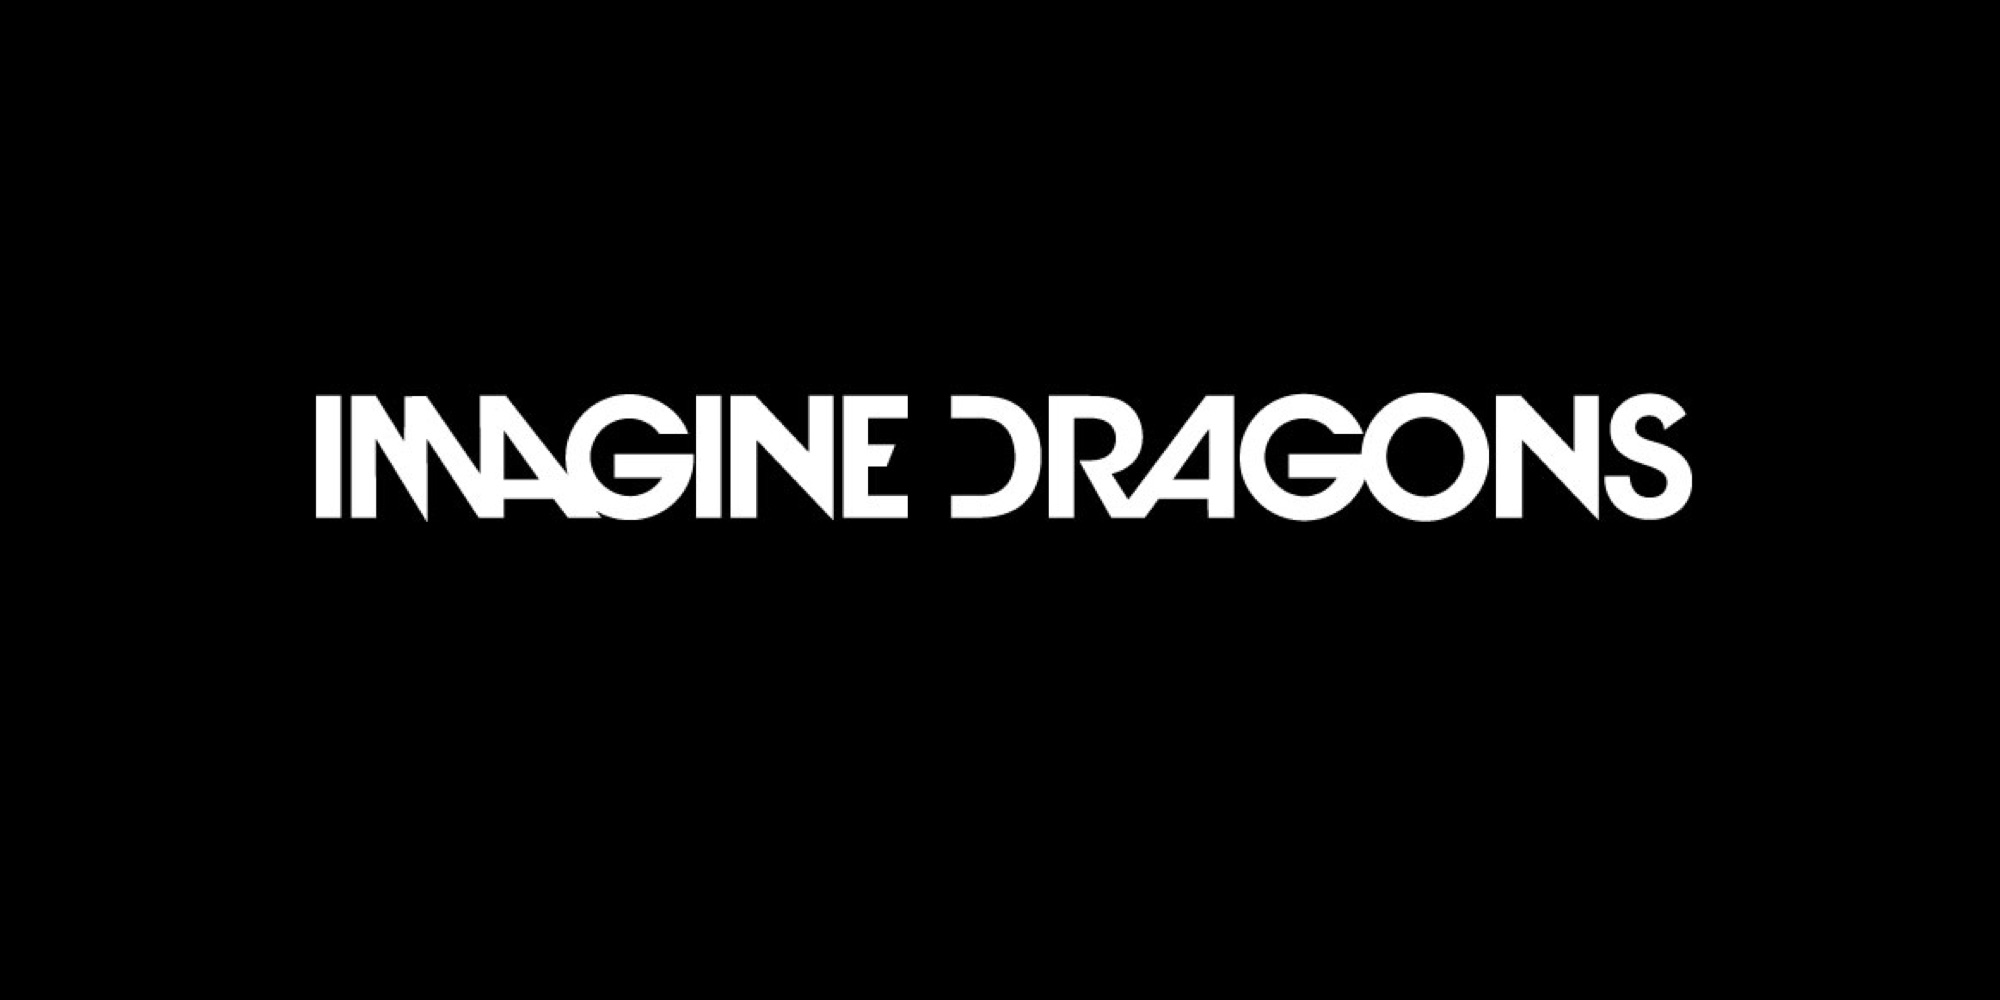 Imagine de. Imagine Dragons логотип группы. Imagine Dragons надпись. Логотип амаджин Драгонс. Imagine Dragons шрифт.